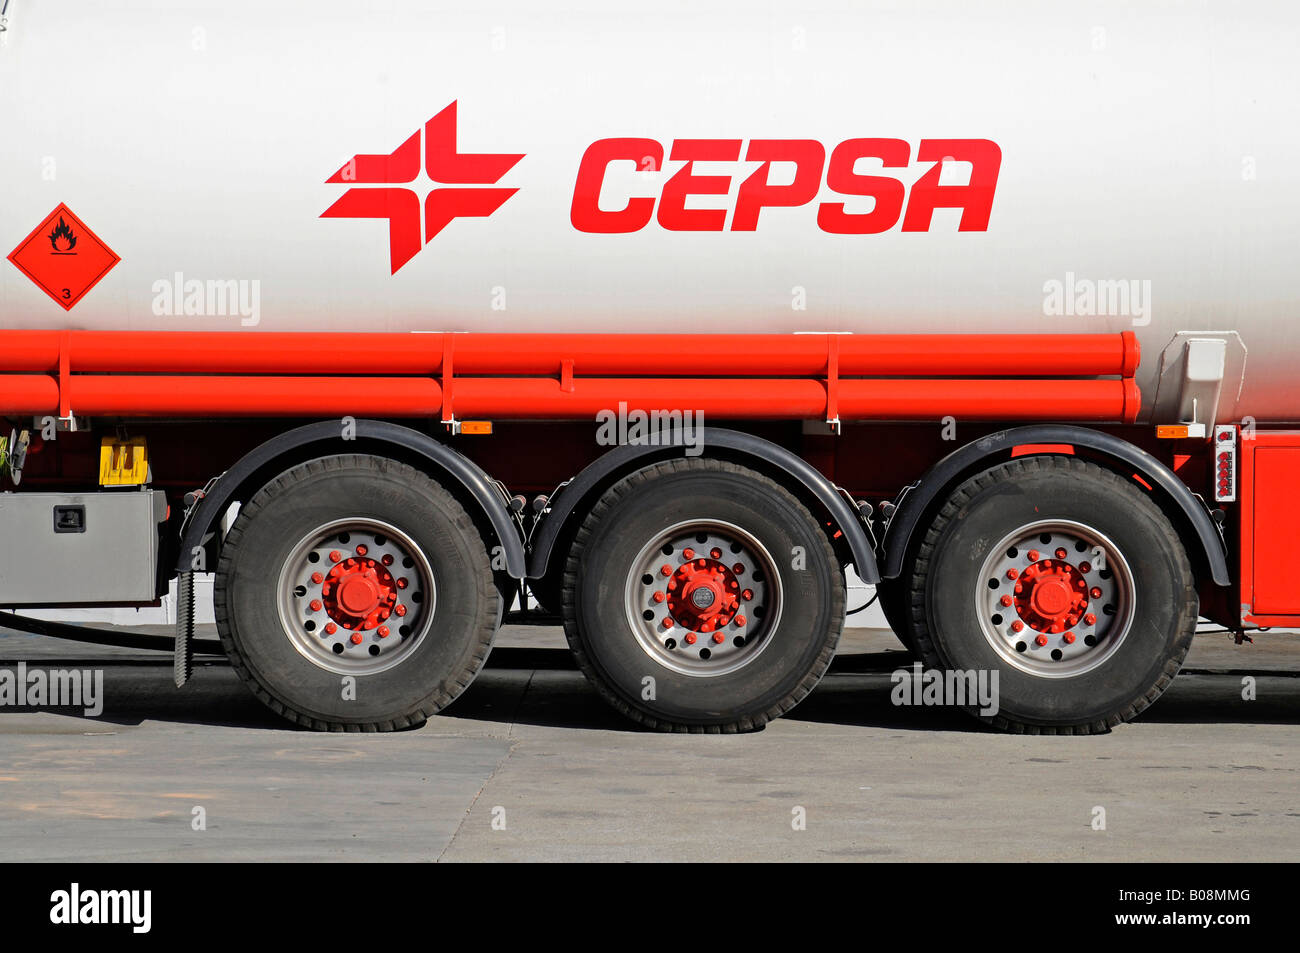 Cepsa oil company logo on a fuel truck, Denia, Valencia, Costa Blanca, Spain Stock Photo